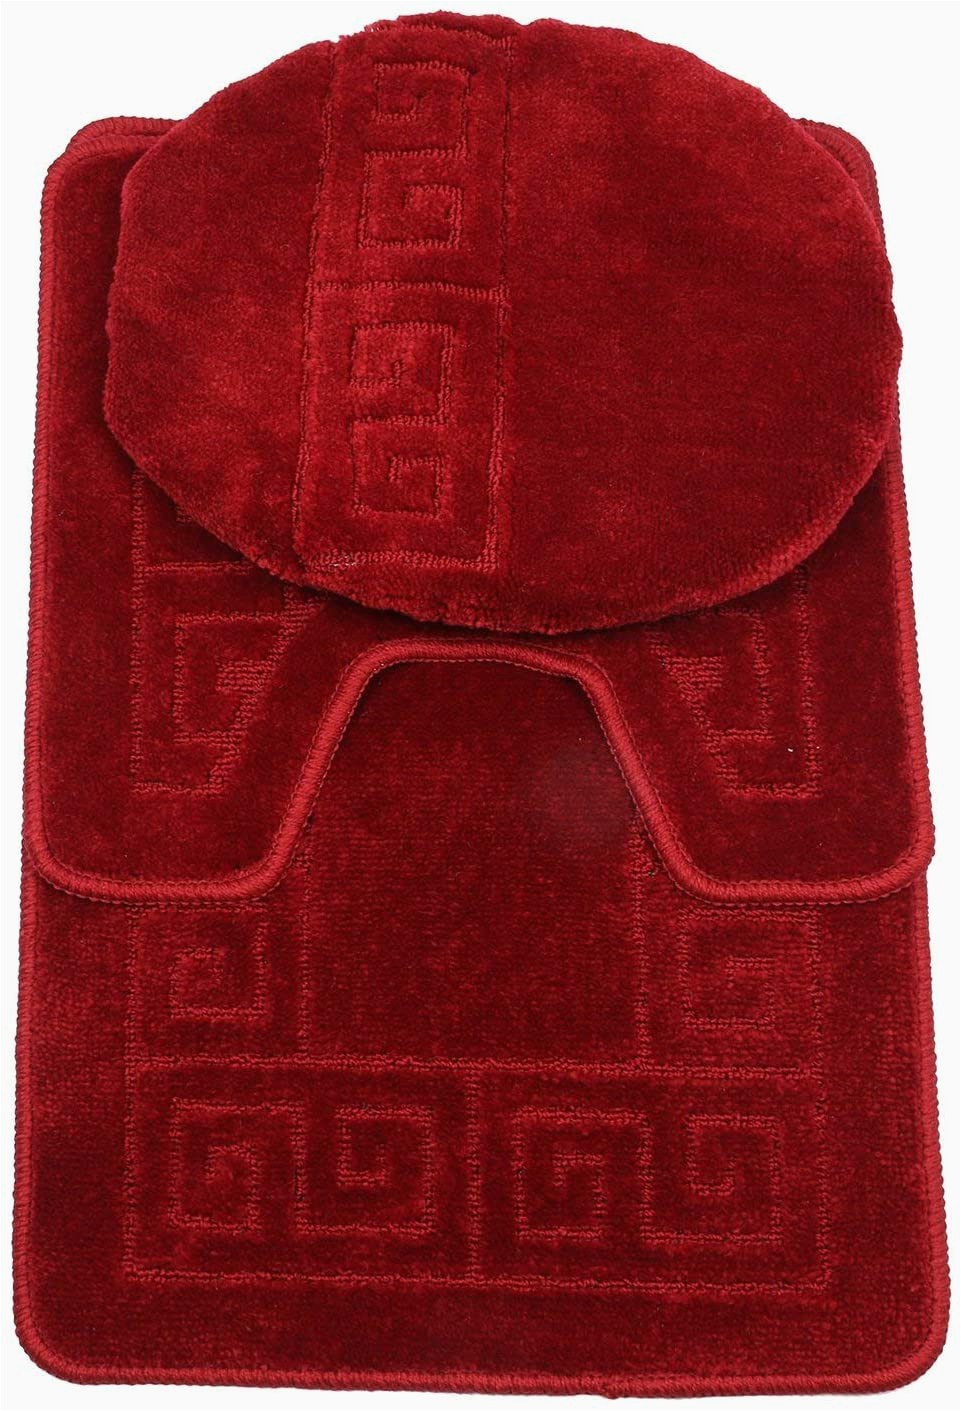 Dark Red Bath Rugs 3 Piece Bath Rug Set Pattern Bathroom Rug 20"x32" Contour Mat 20"x20" with Lid Cover Burgundy